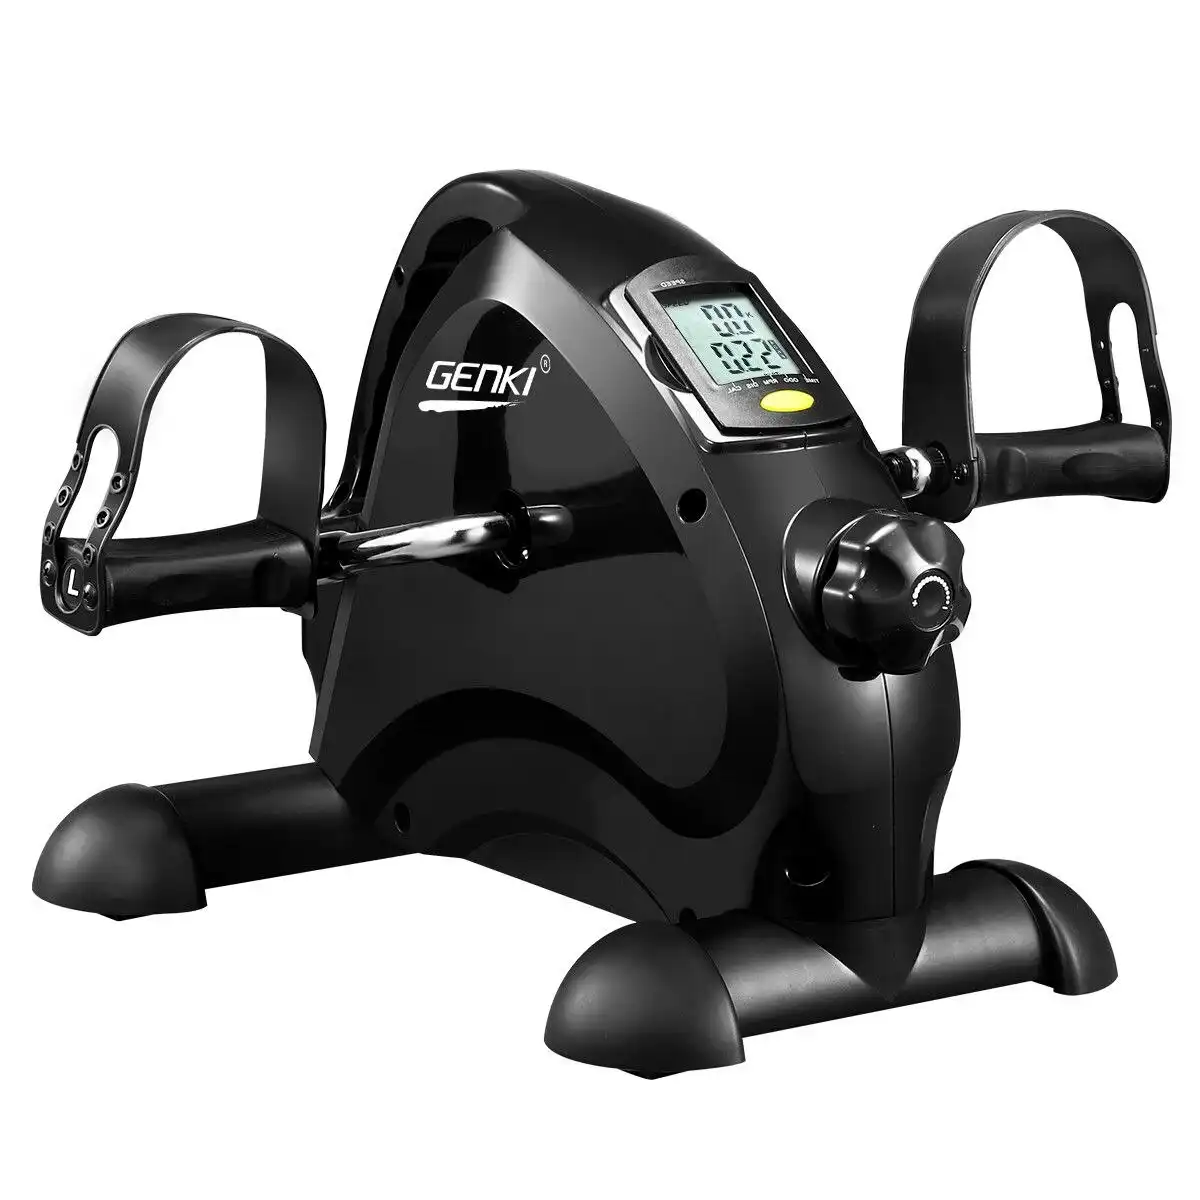 Genki  Mini Exercise Bike Pedal Exerciser Home Gym Fitness Trainer with Adjustable Resistance Black